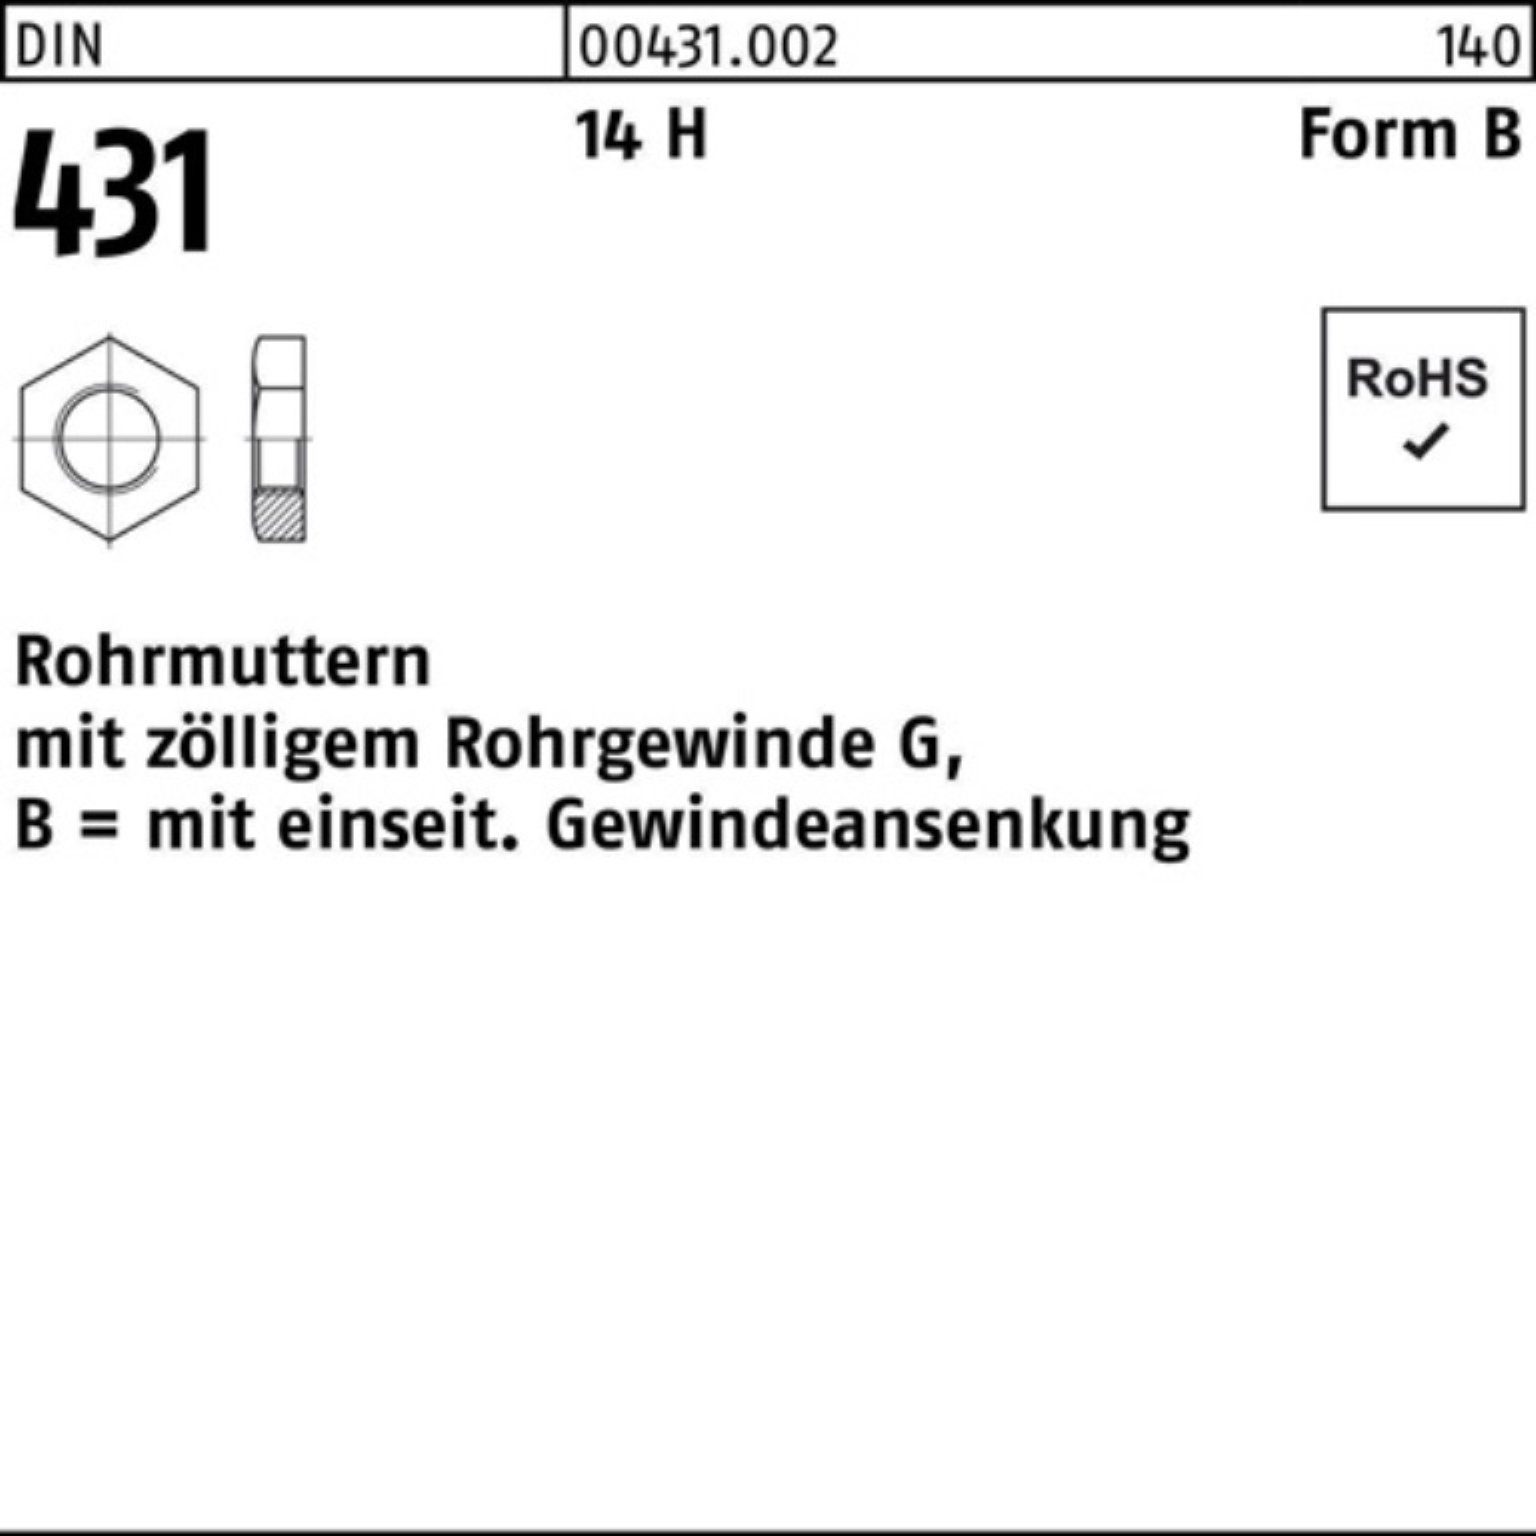 Reyher Rohrmutter 100er Pack Rohrmutter DIN 431 BG 3/8 14 H 50 Stück DIN 431 14 H Form